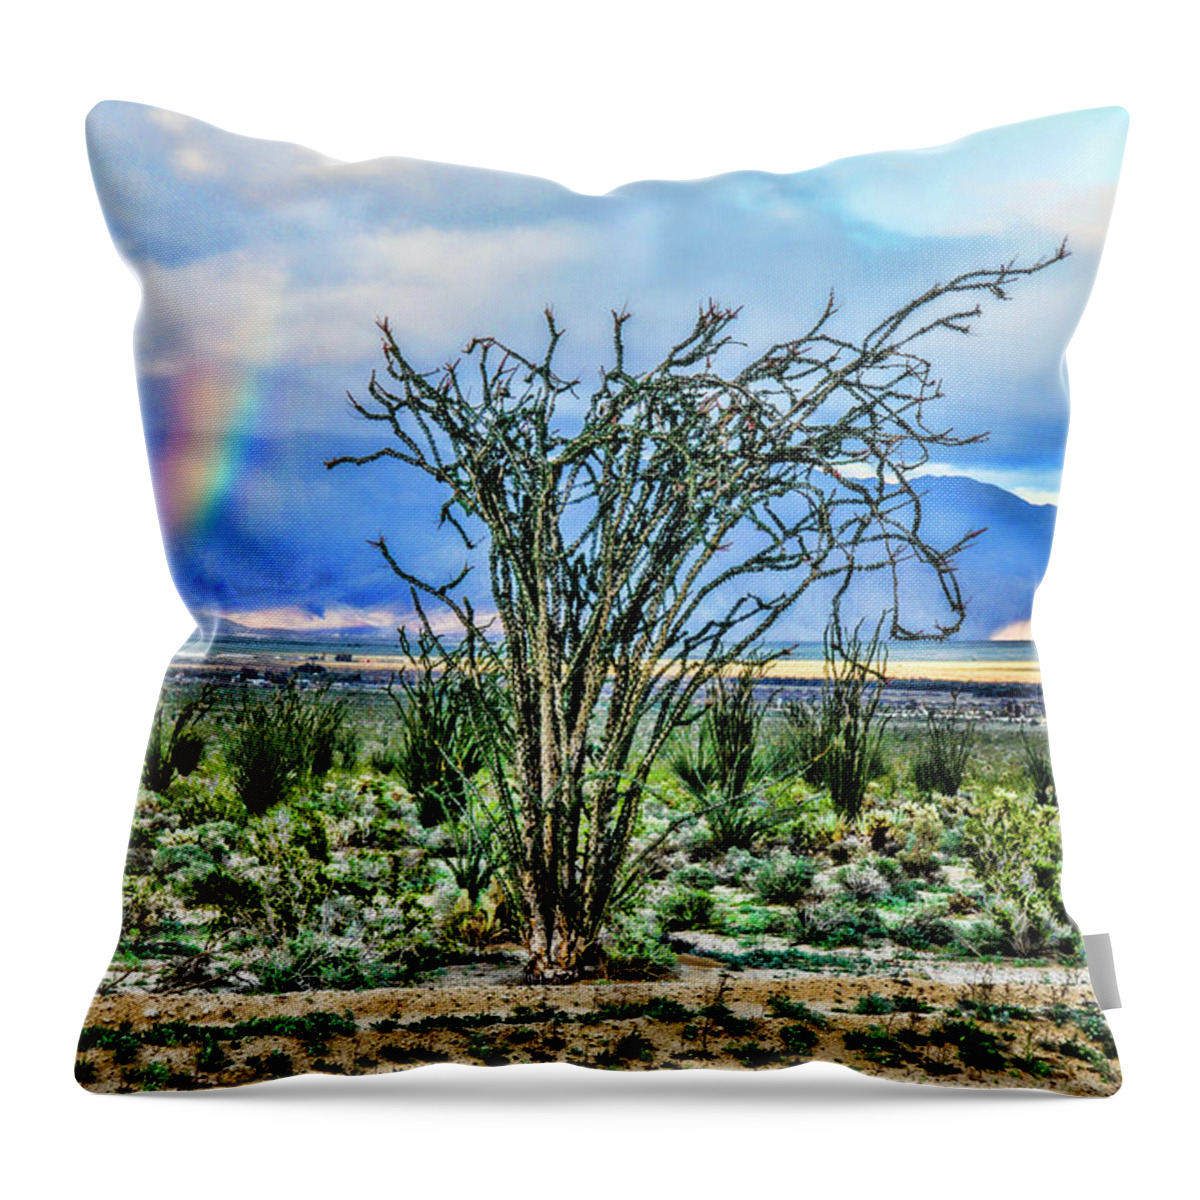 Ocotillo Cactus Rainbow Throw Pillow featuring the digital art Ocotillo Cactus Rainbow by Daniel Hebard